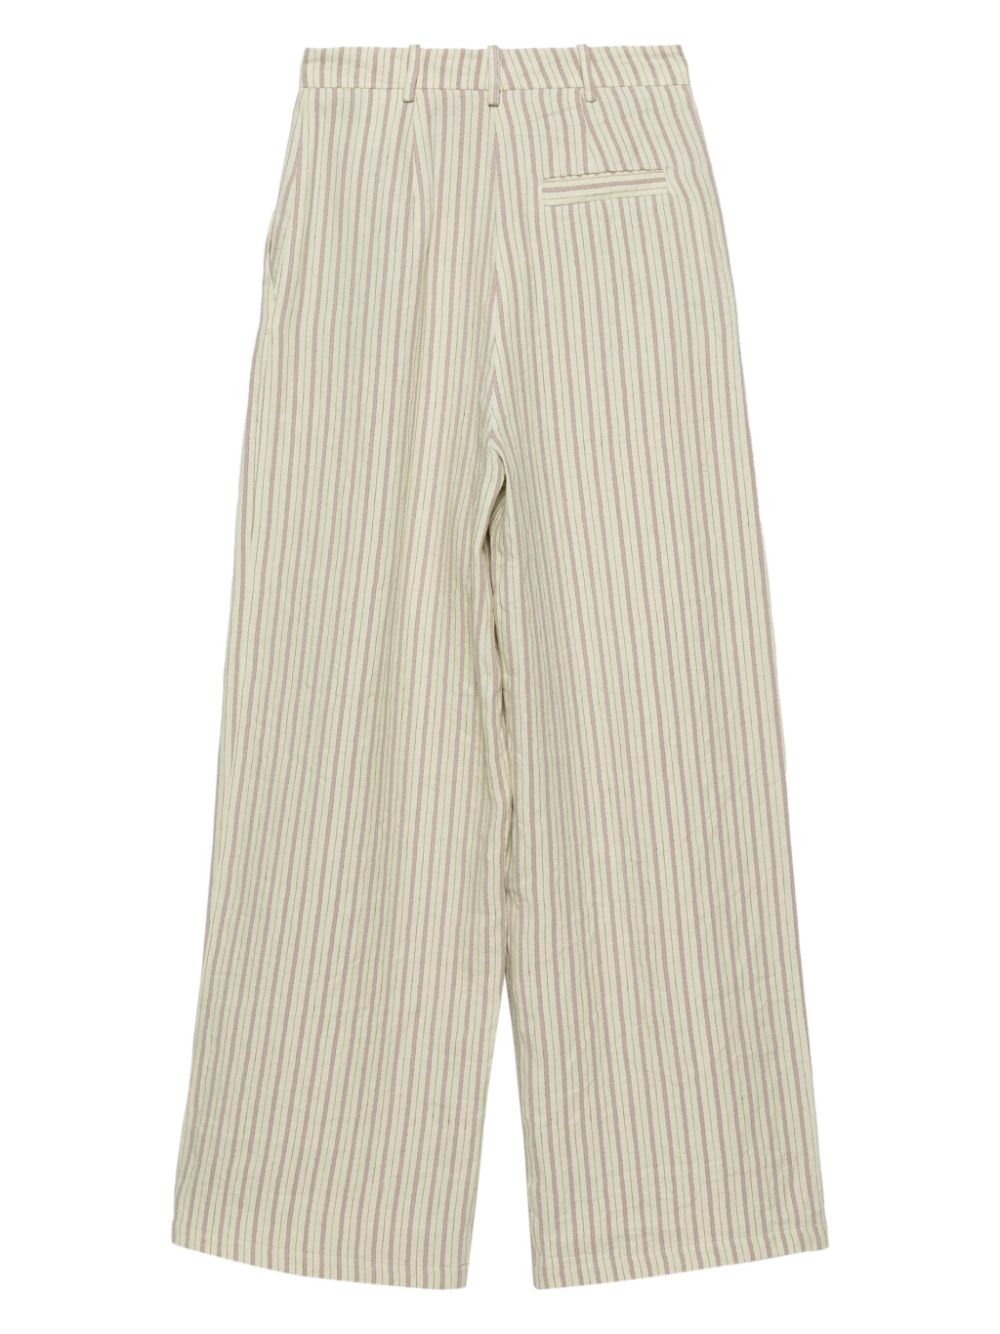 Alysi ALYSI- High-waisted Striped Trousers